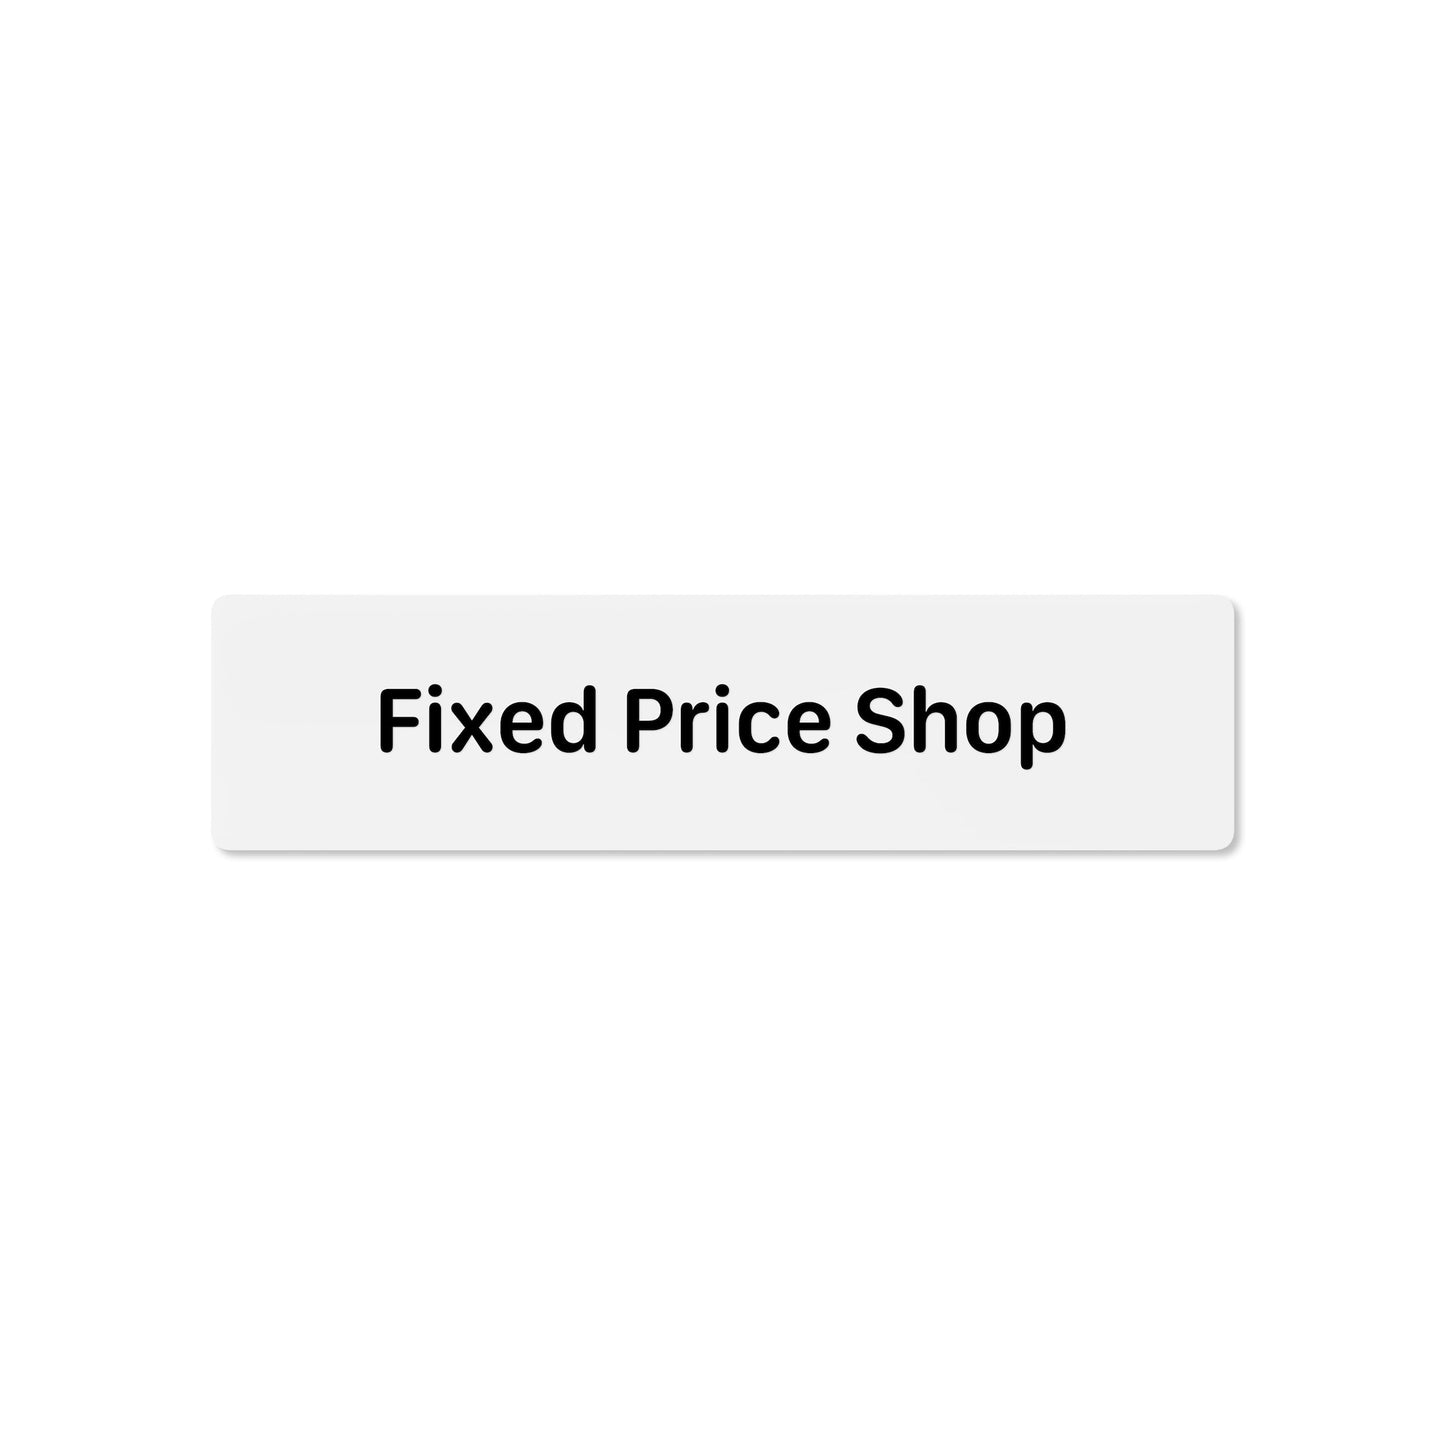 Fixed Price Shop